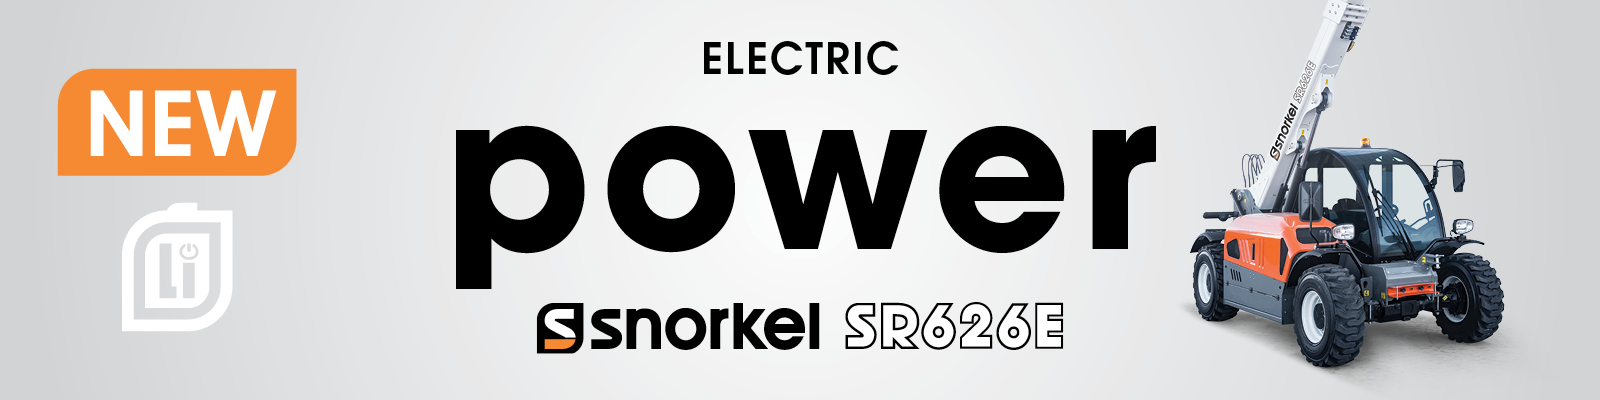 Electric Power Snorkel SR626E